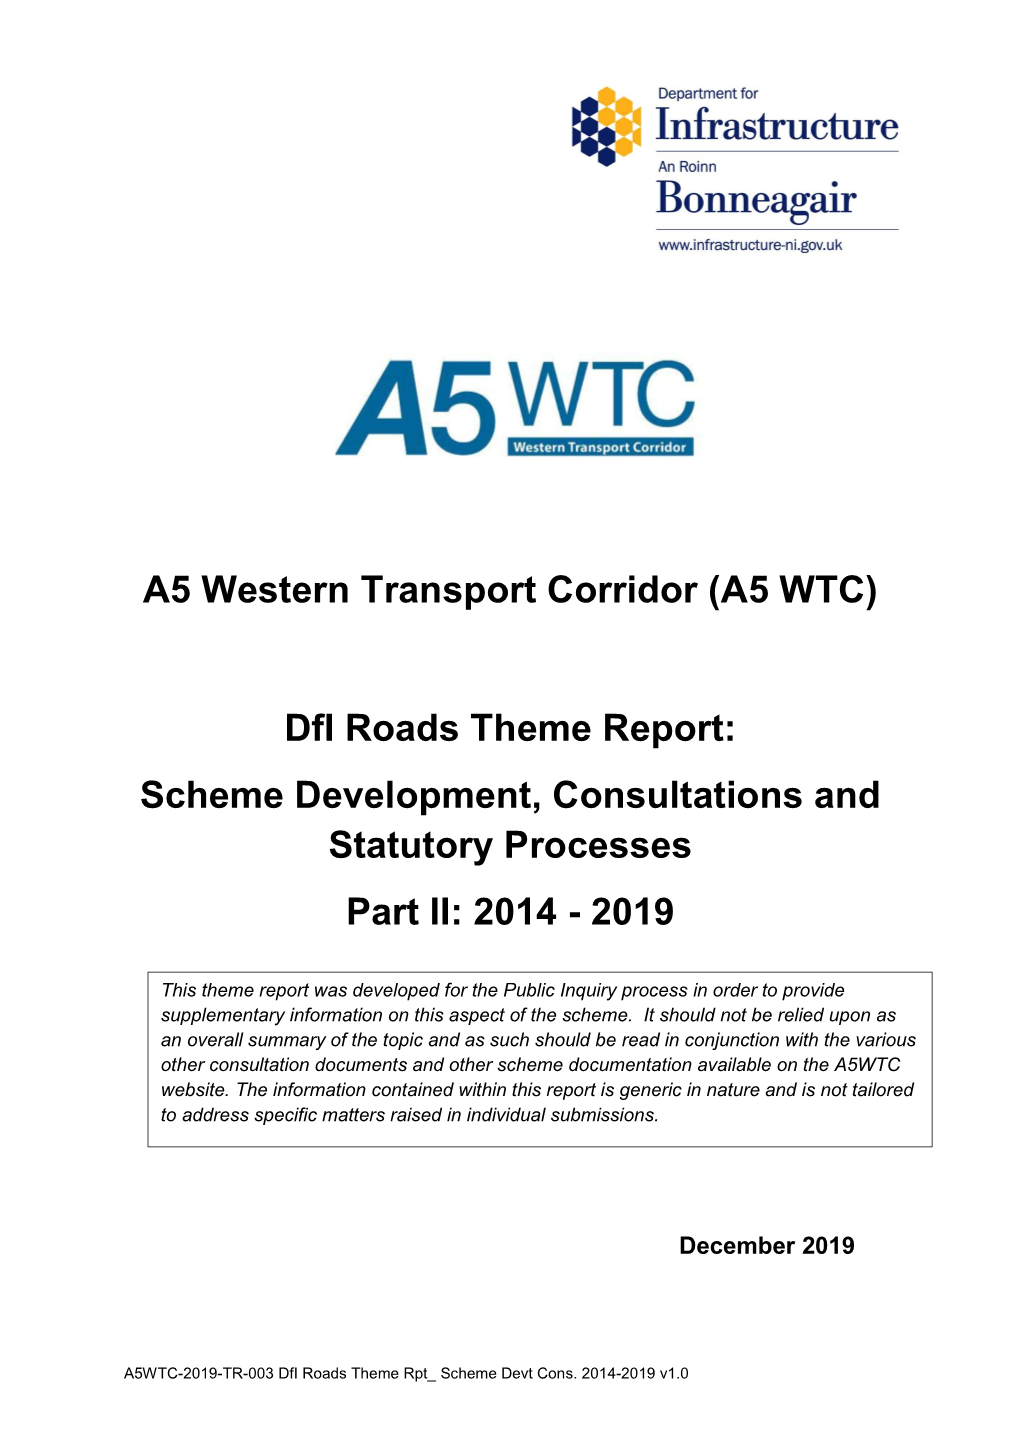 A5 Western Transport Corridor (A5 WTC) Dfi Roads Theme Report